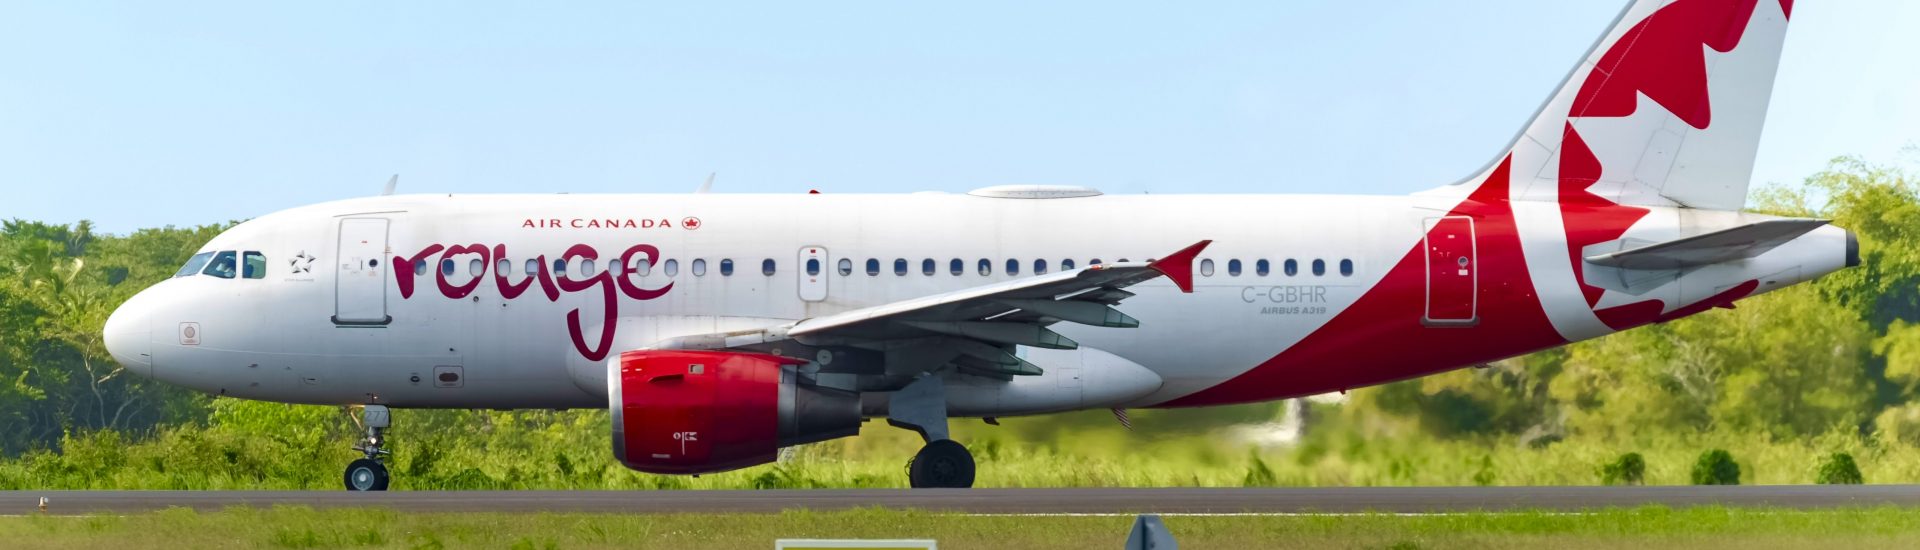 A319-100 Air Canada Rouge C-GBHR